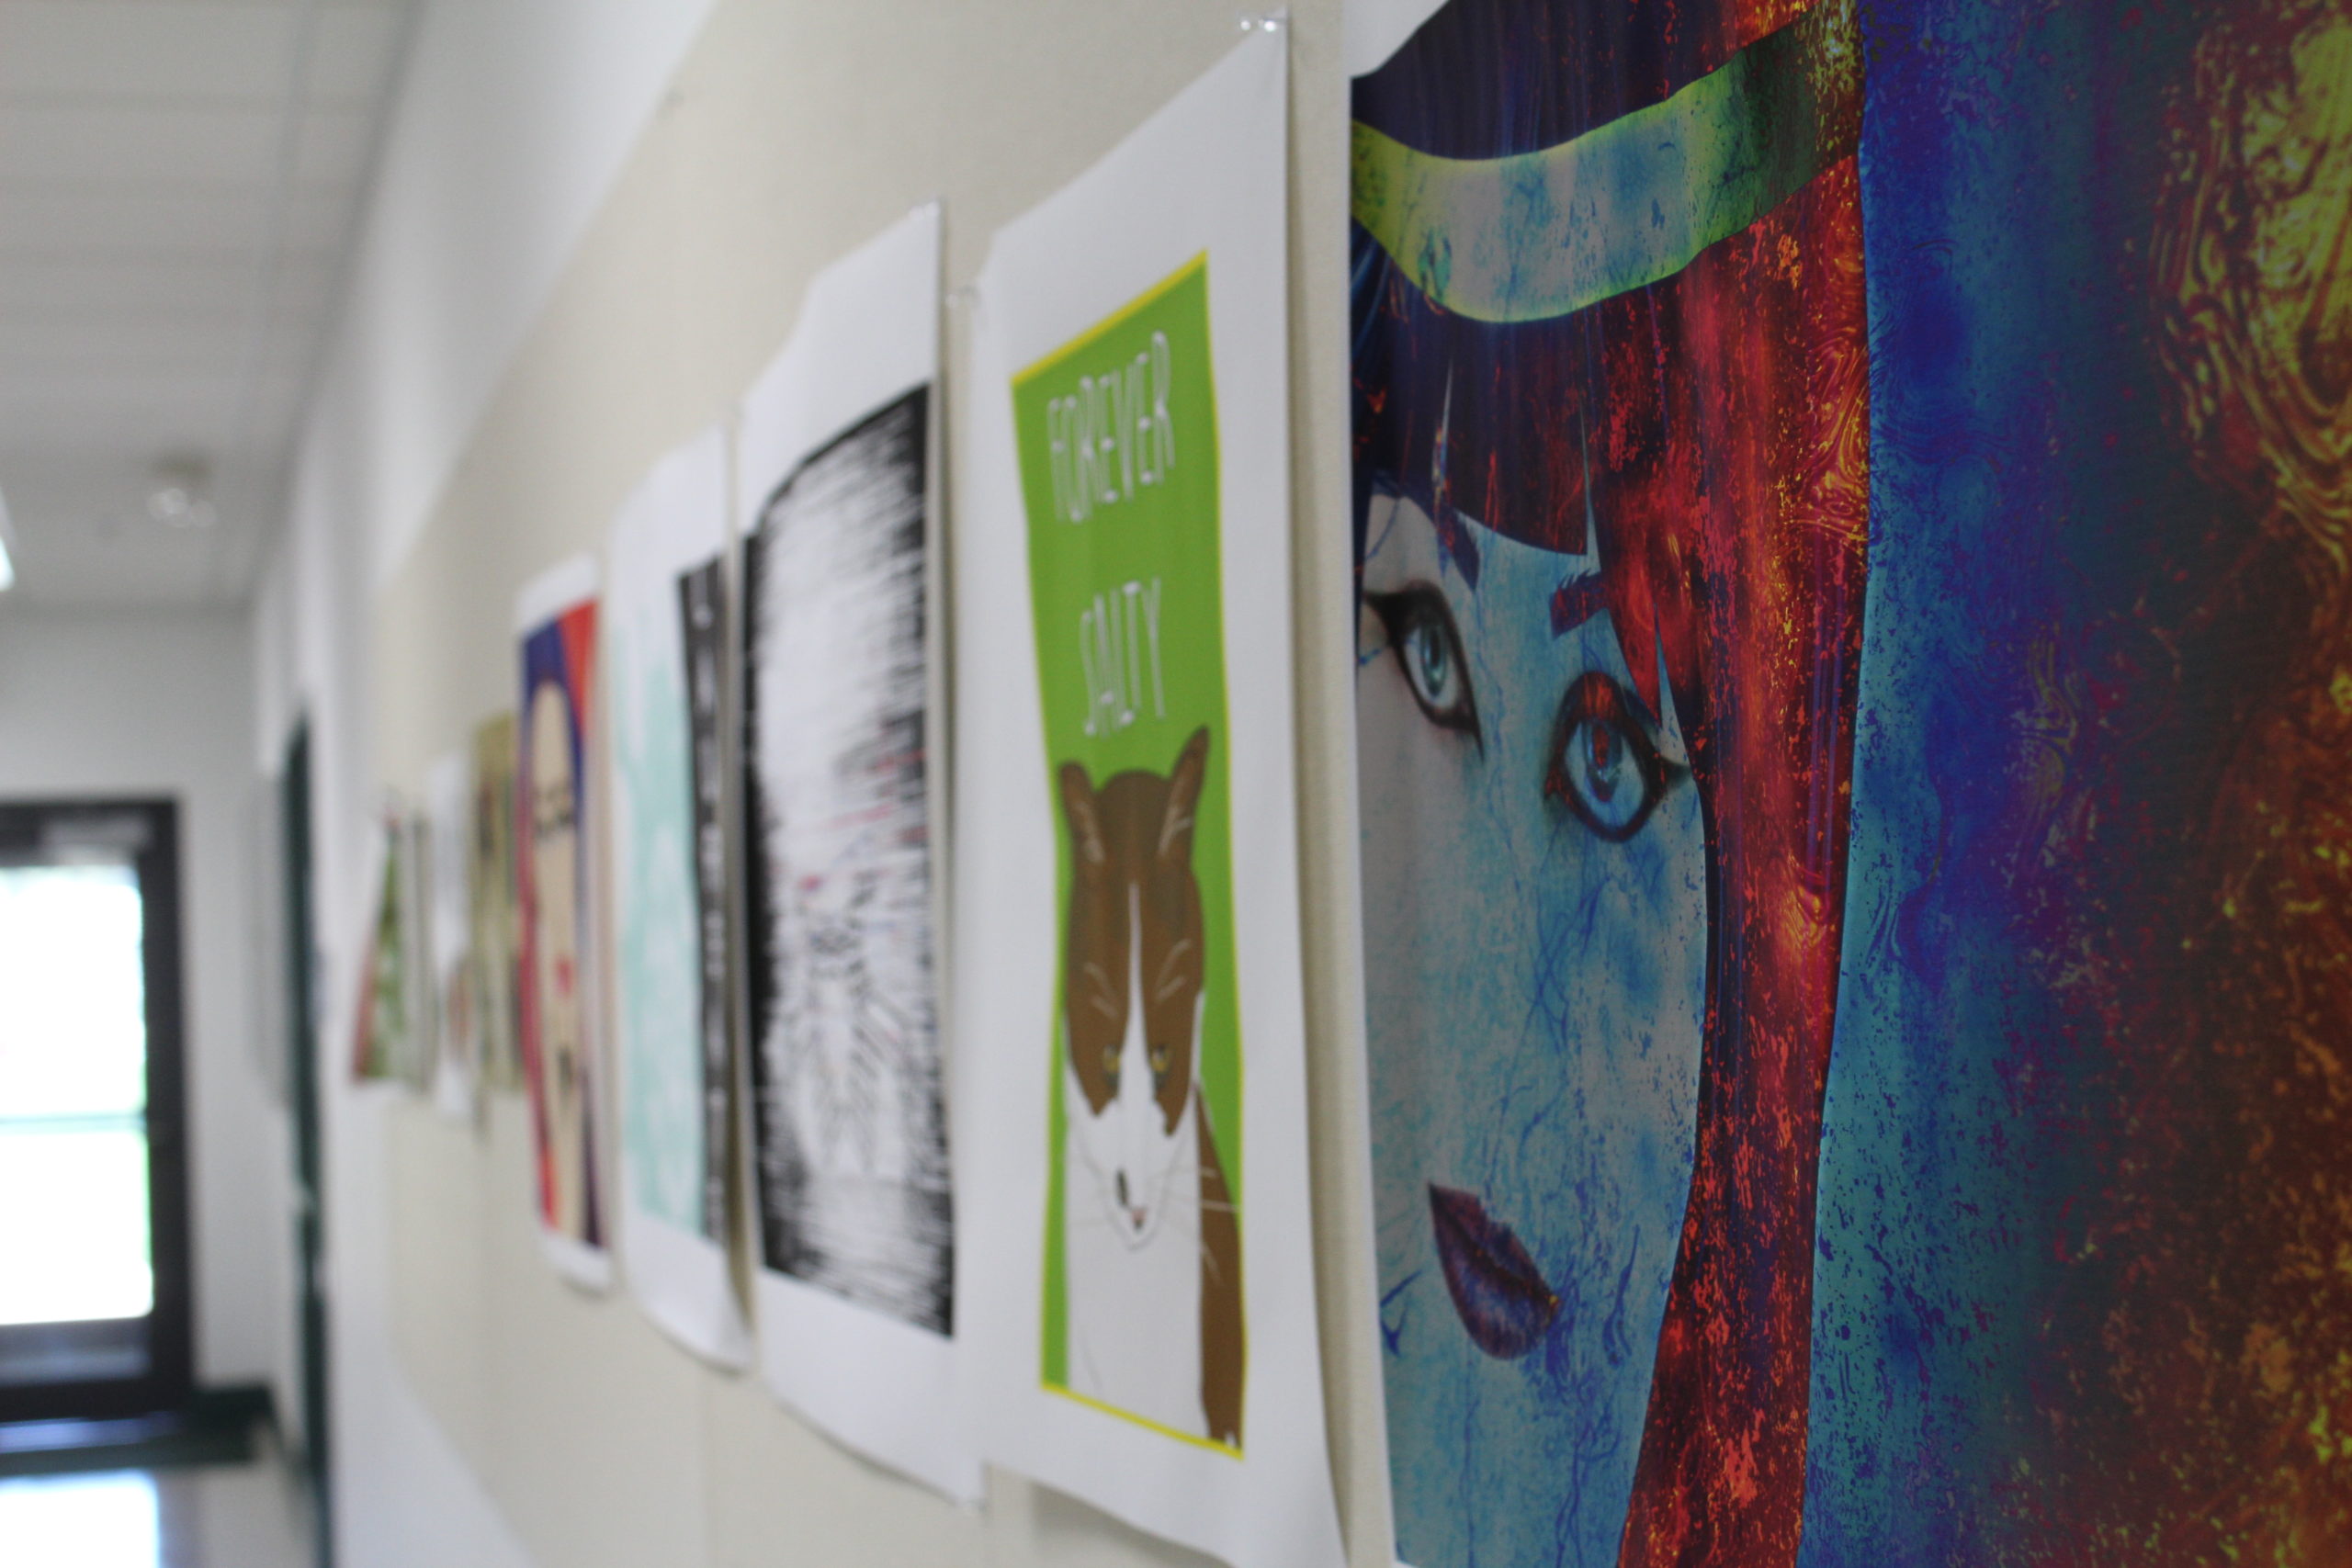 Close-up of posters at the Visual Arts Center.